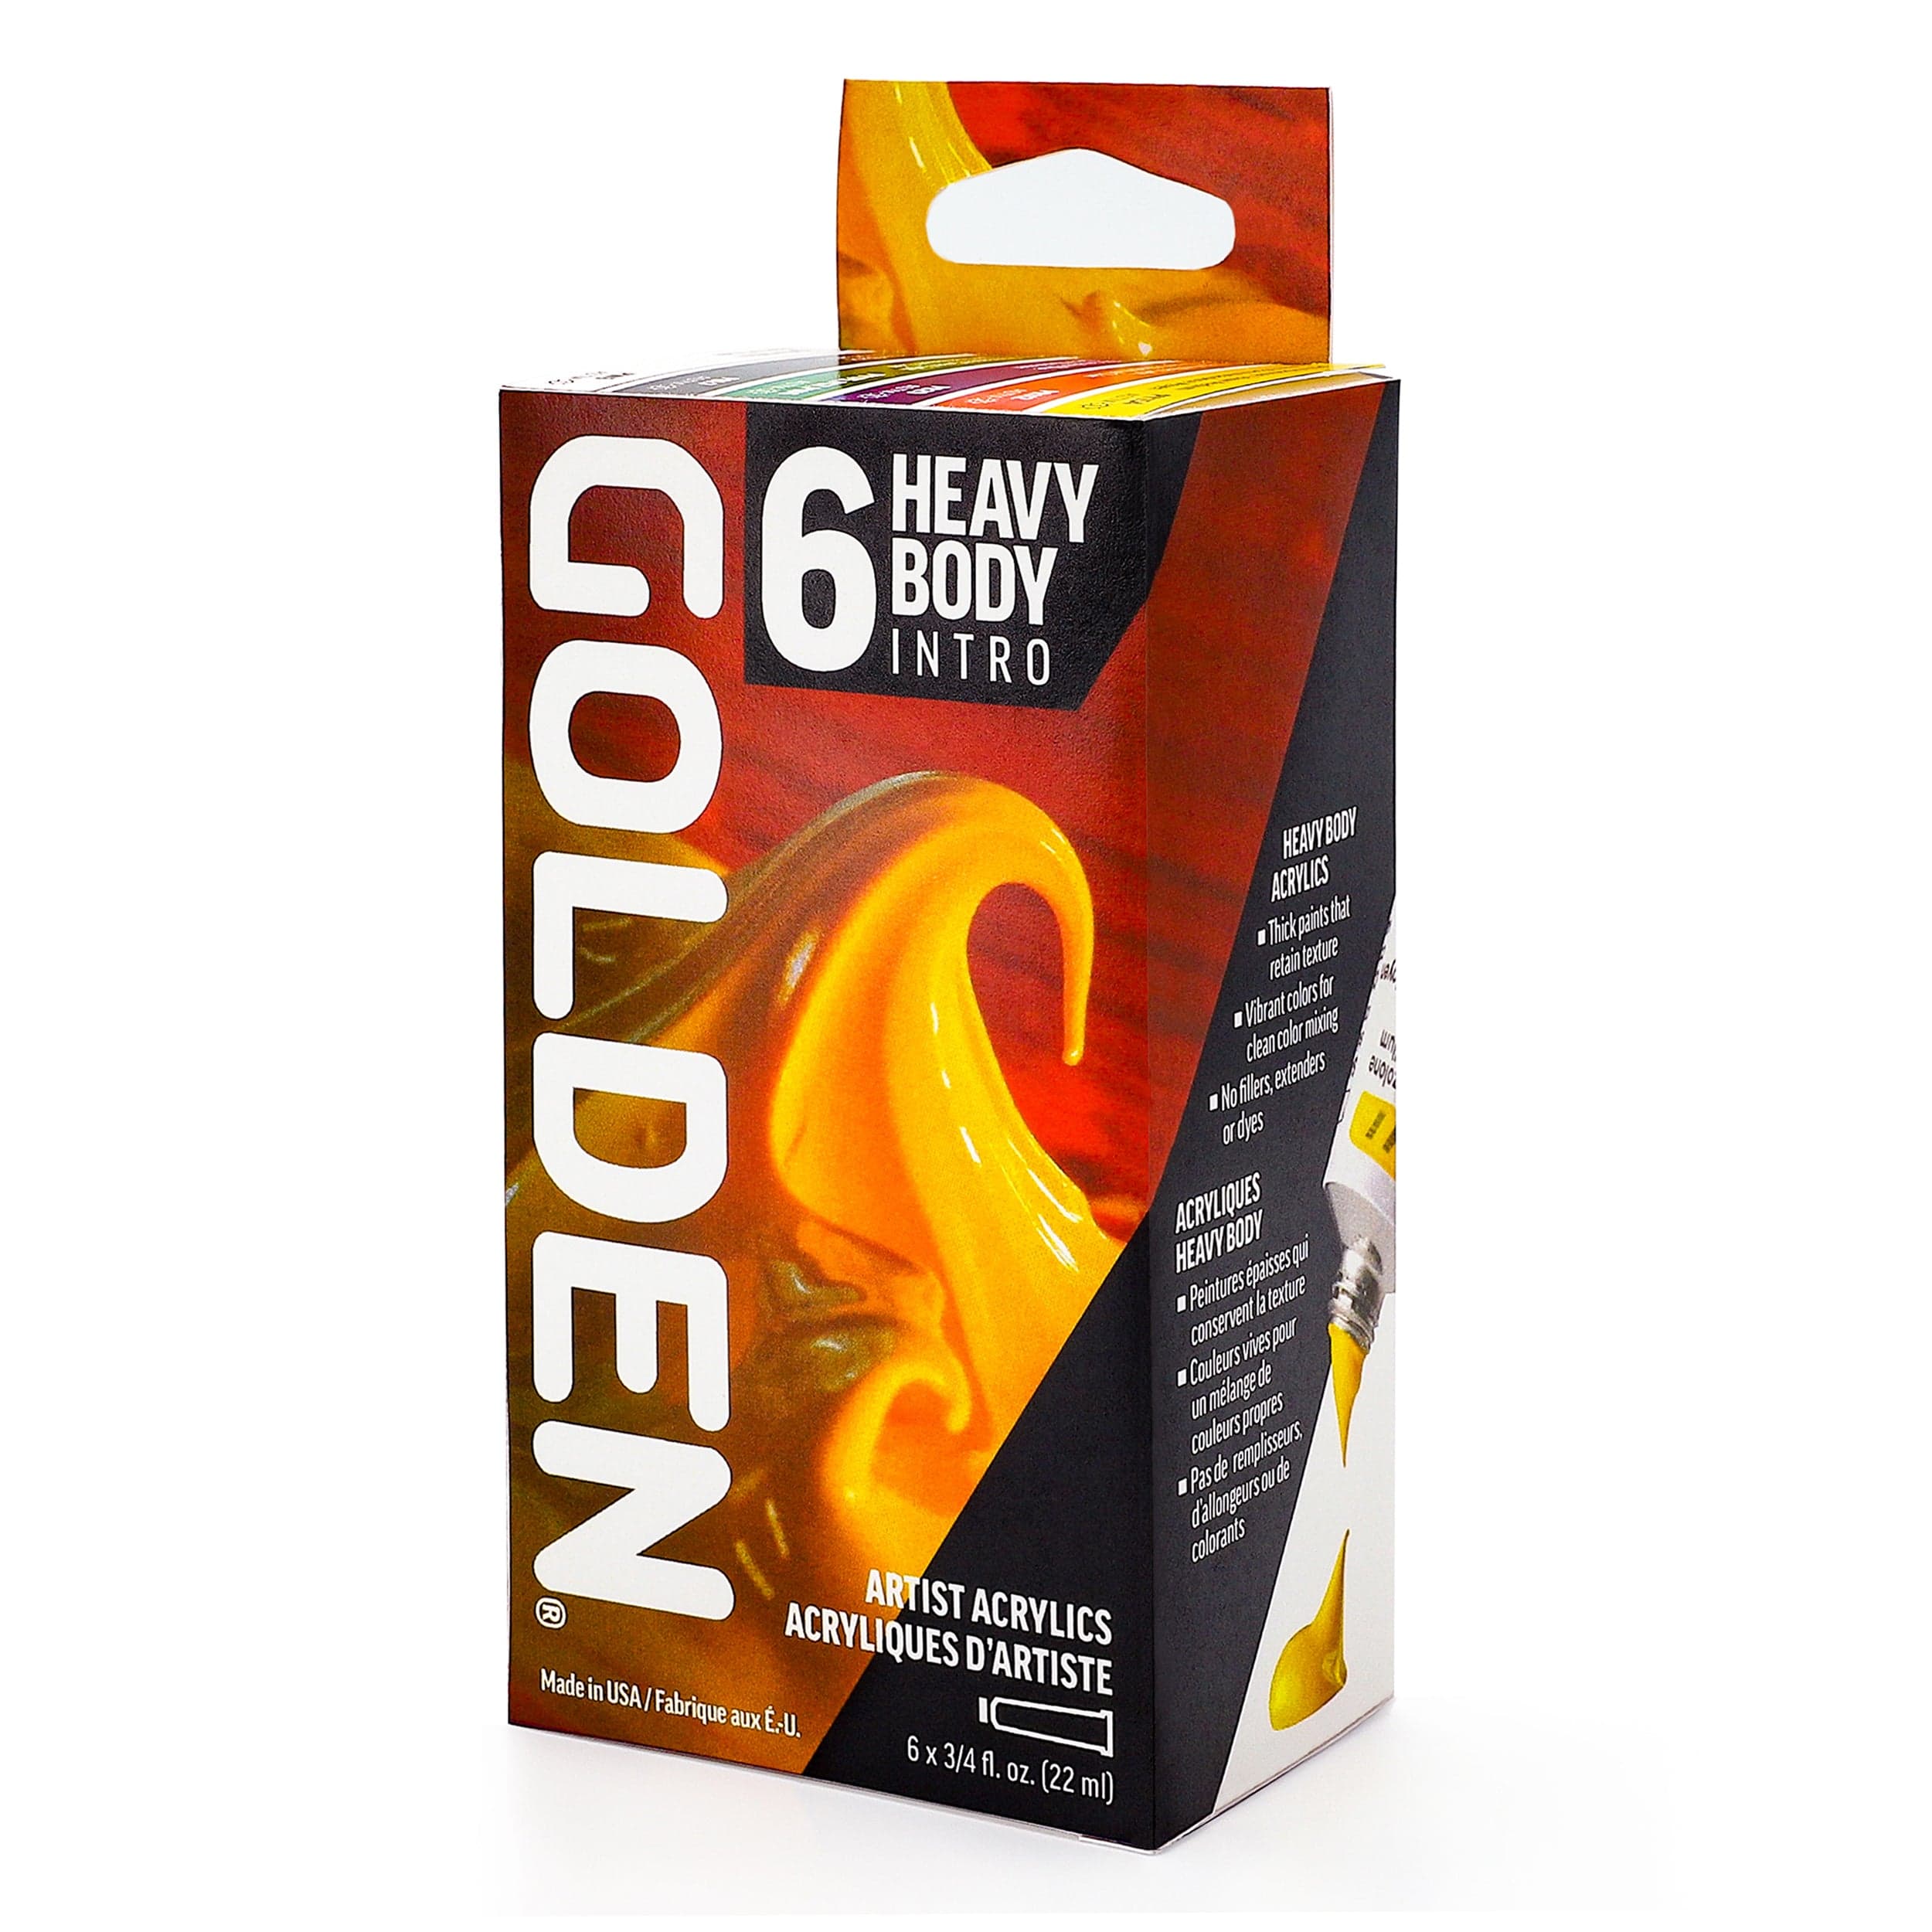 Golden Akrylmaling GOLDEN Heavy Body Intro sæt 075